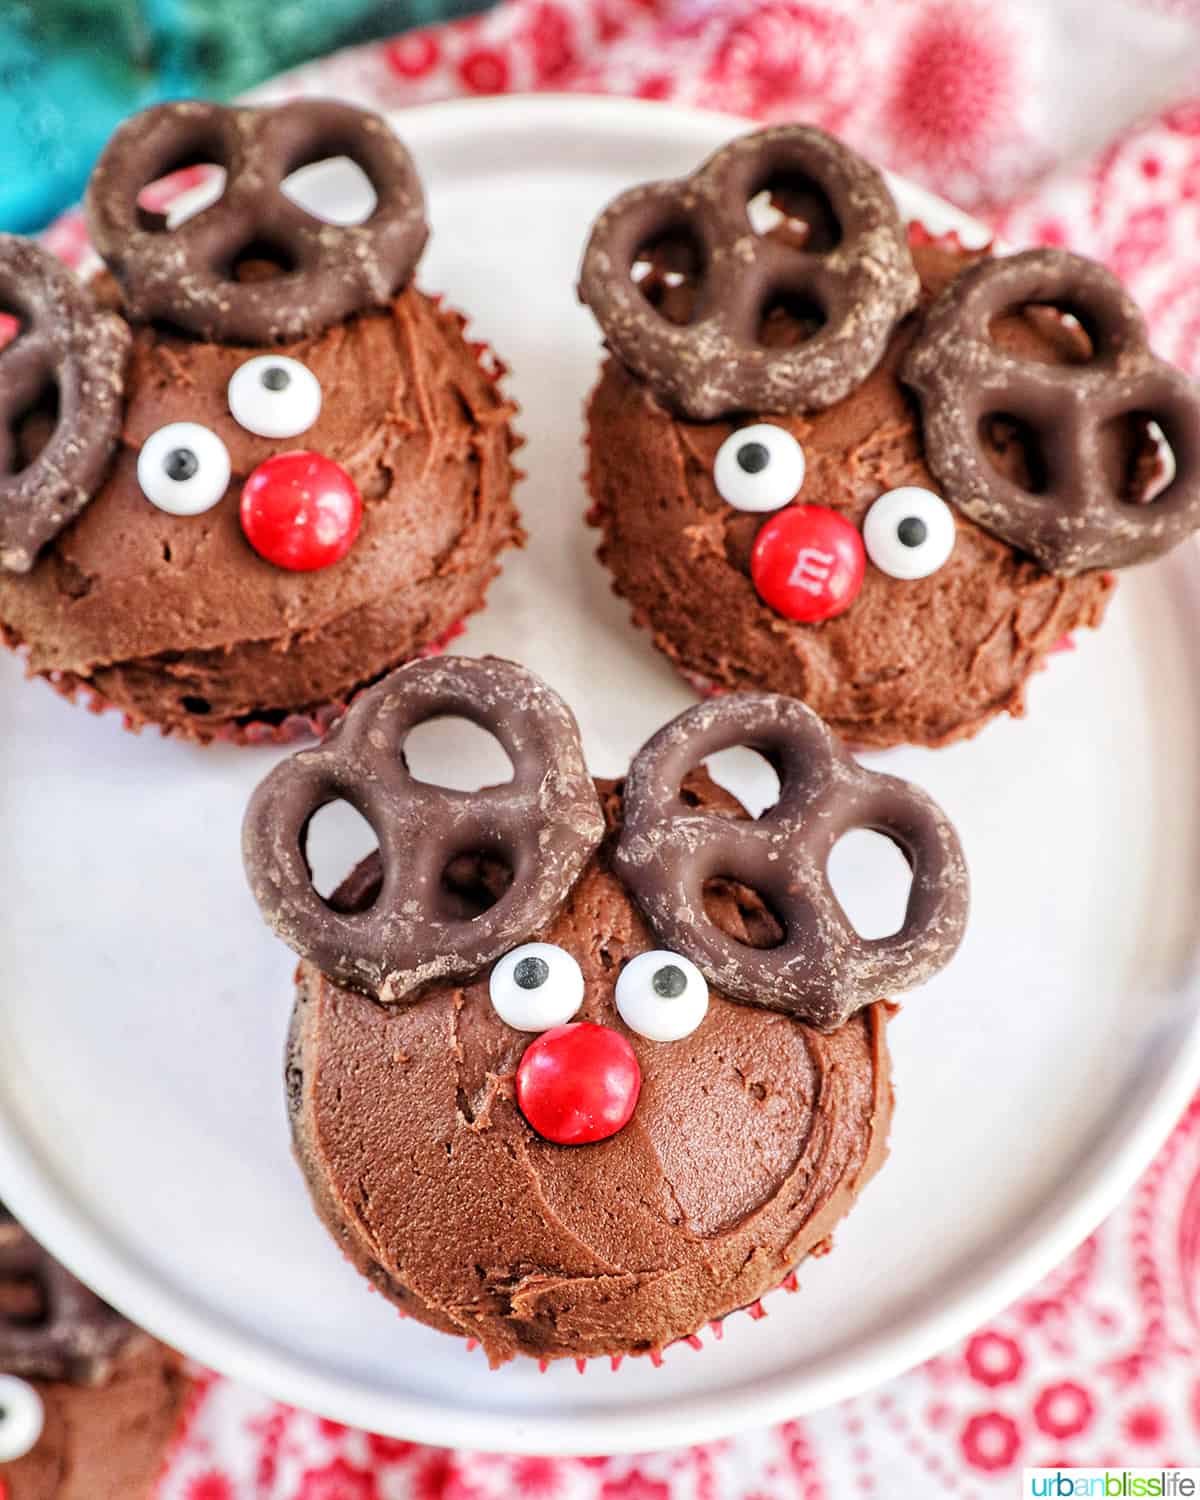 three reindeer cupcakes on a plate.